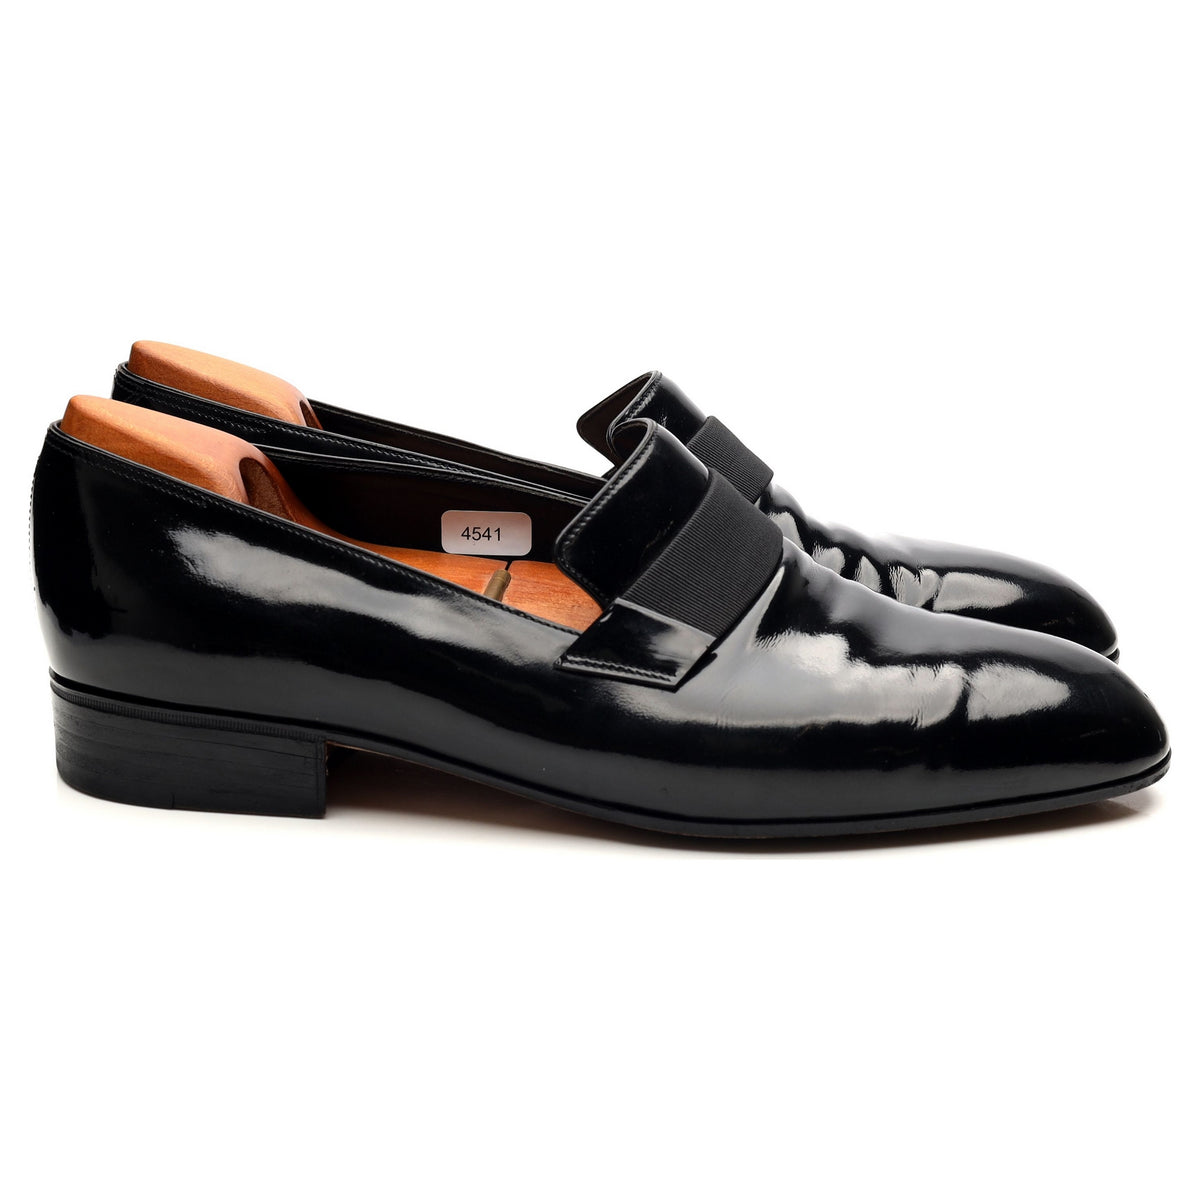 Bespoke Black Patent Leather Loafers UK 9.5 / UK 10